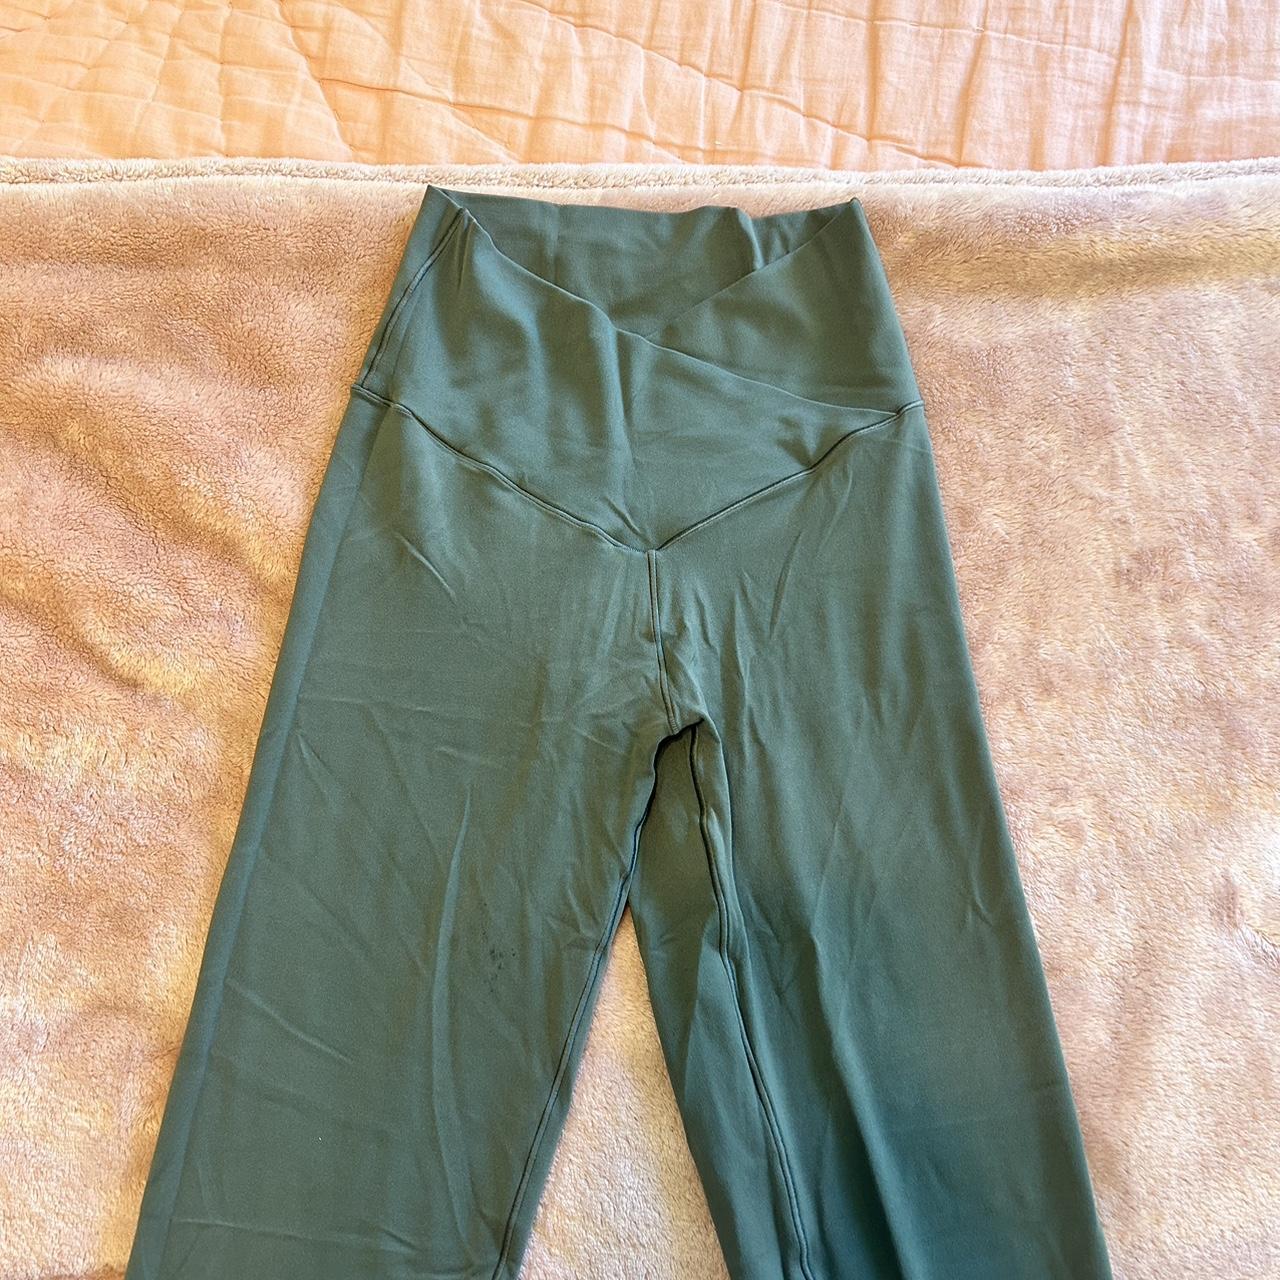 AERIE OFFLINE green crossover leggings! - worn a... - Depop